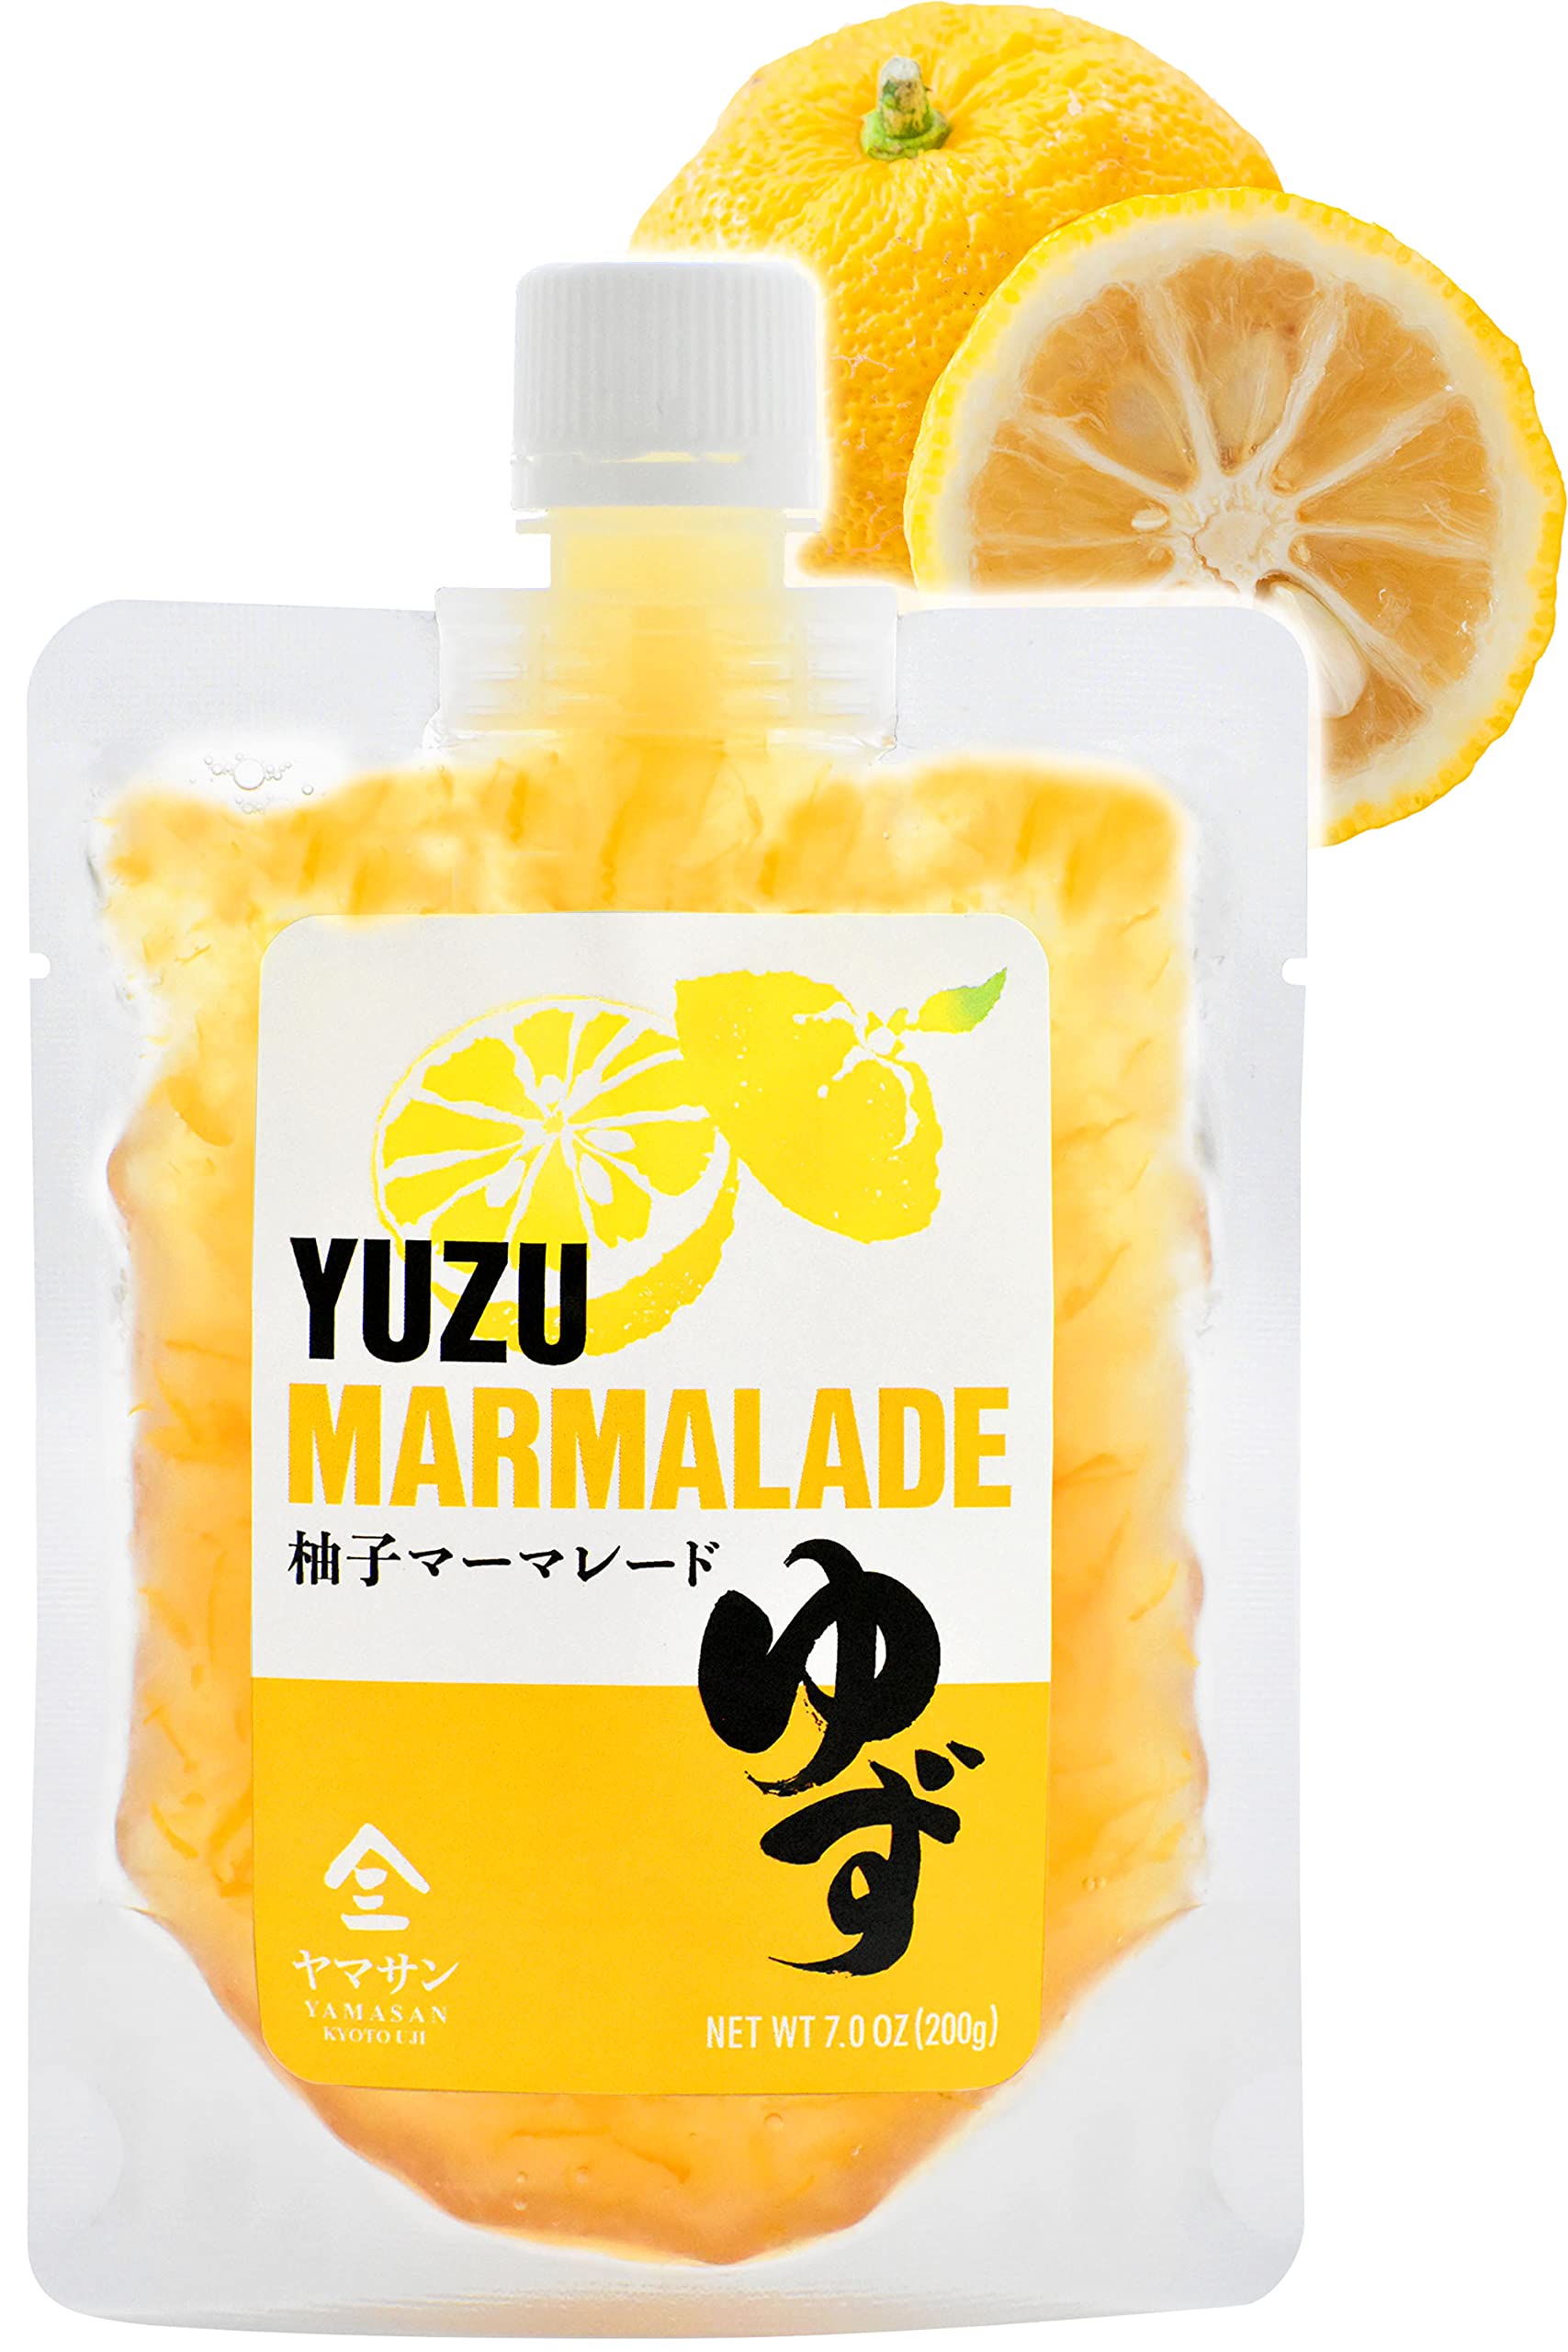 Premium Yuzu from Japan